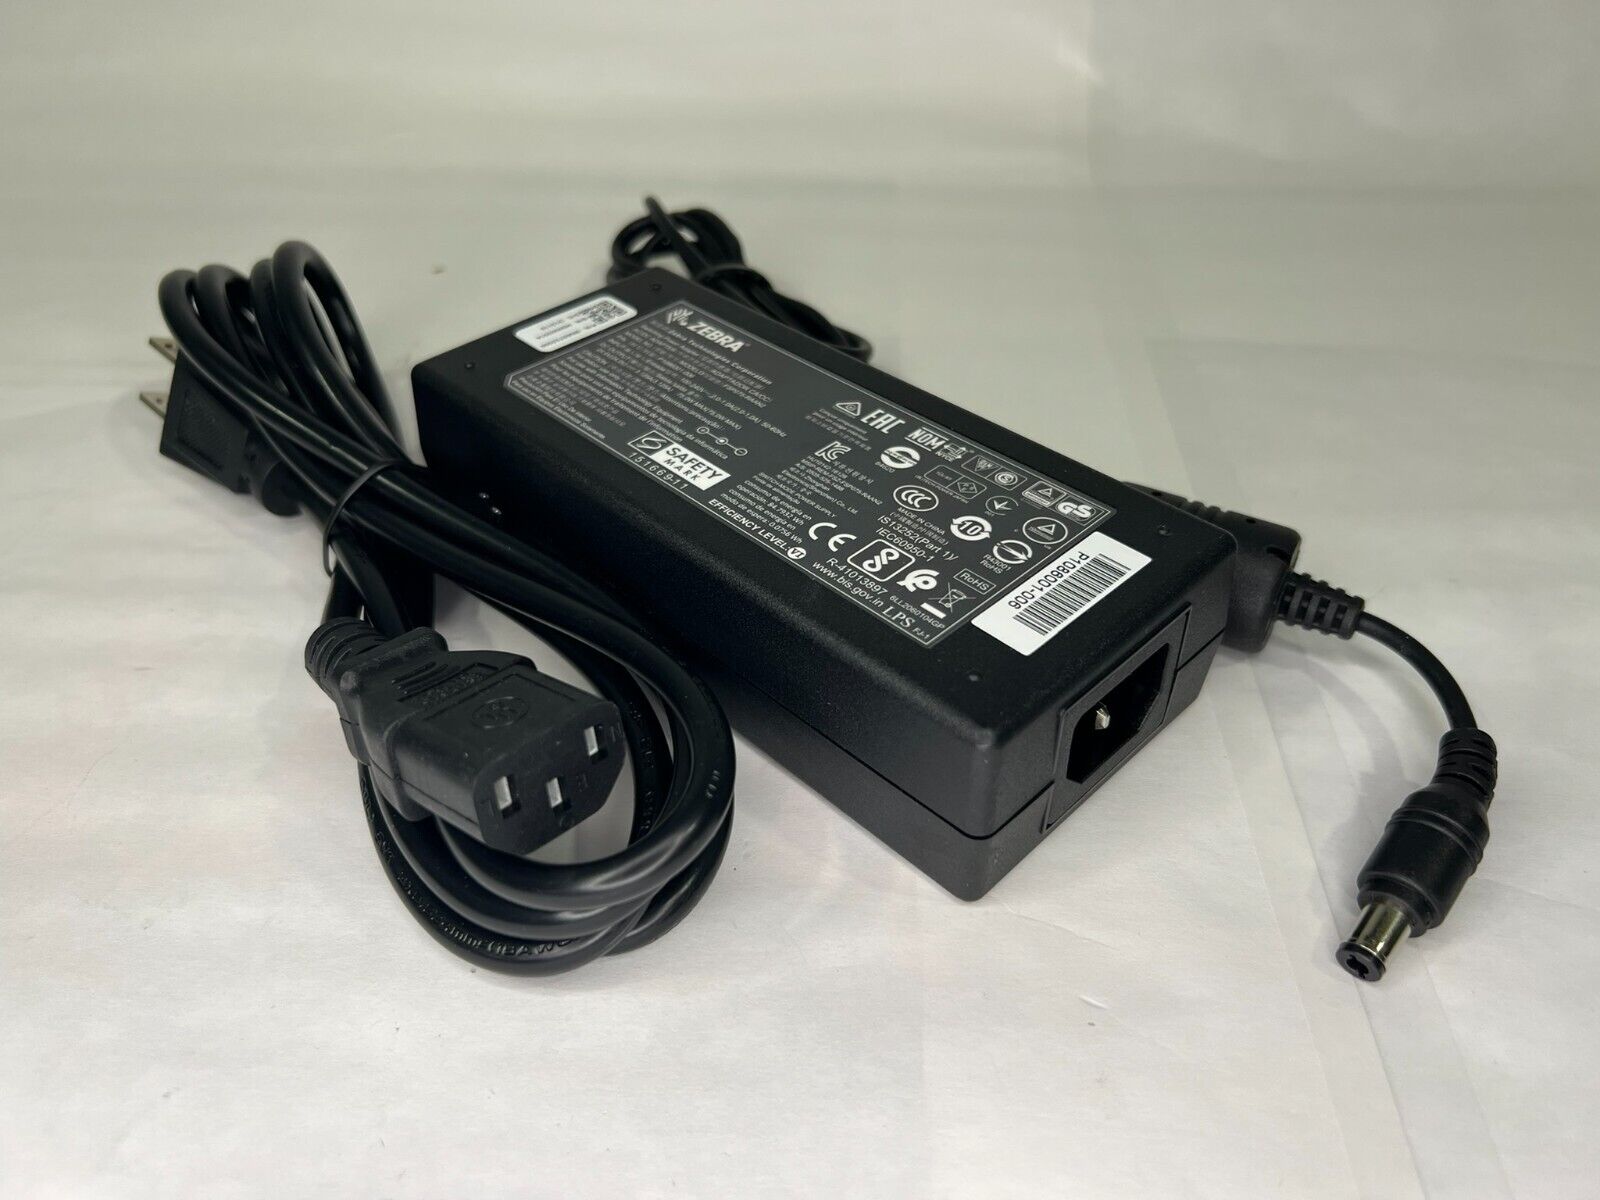 Genuine Zebra AC Adapter for GX420 GK420 ZD420 ZD421 Label Printer Power Supply